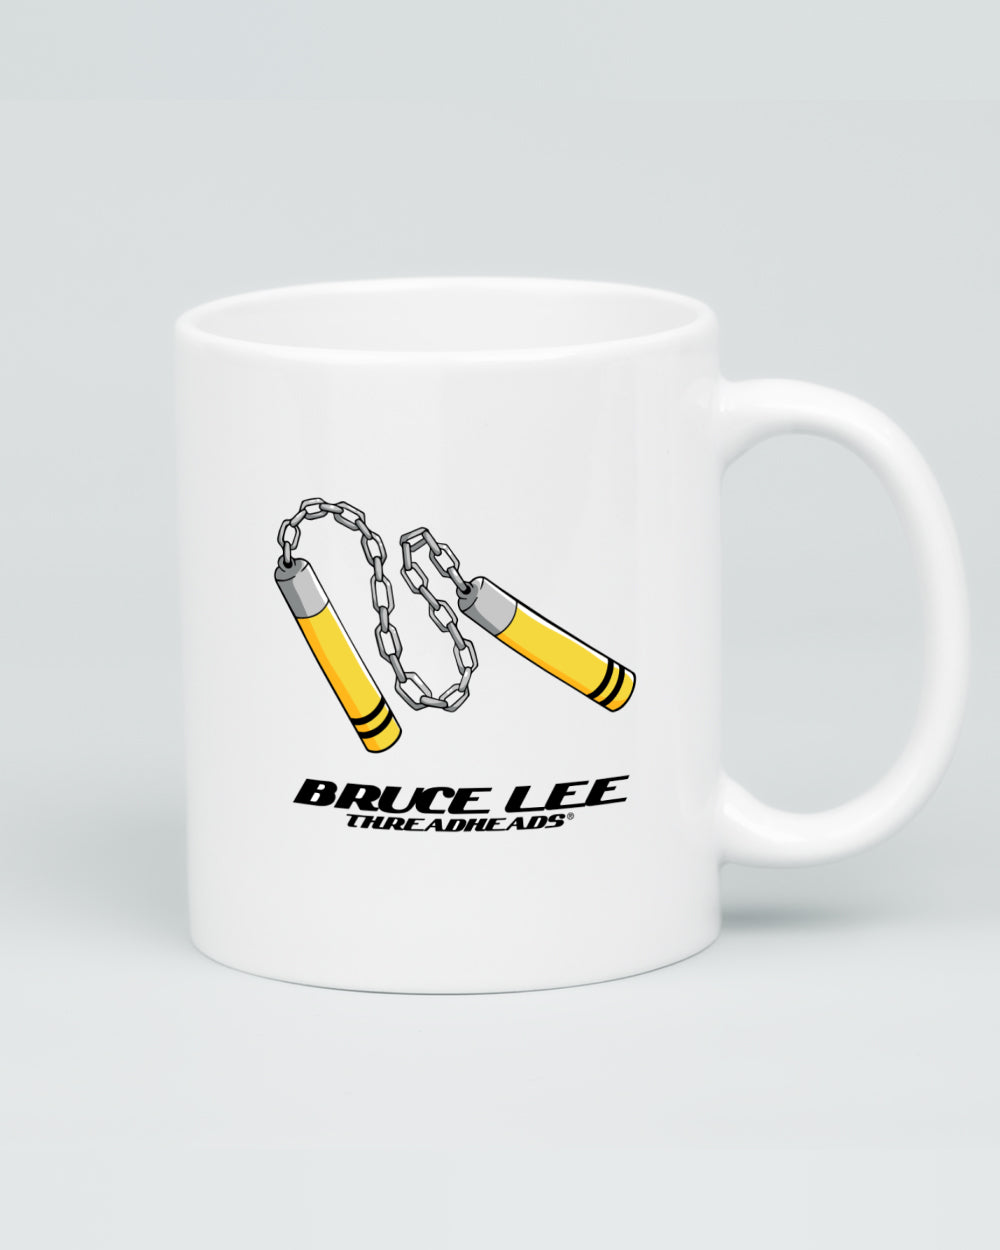 Bruce Lee Bundle | T-Shirt, Mug & Air Freshener Bundle